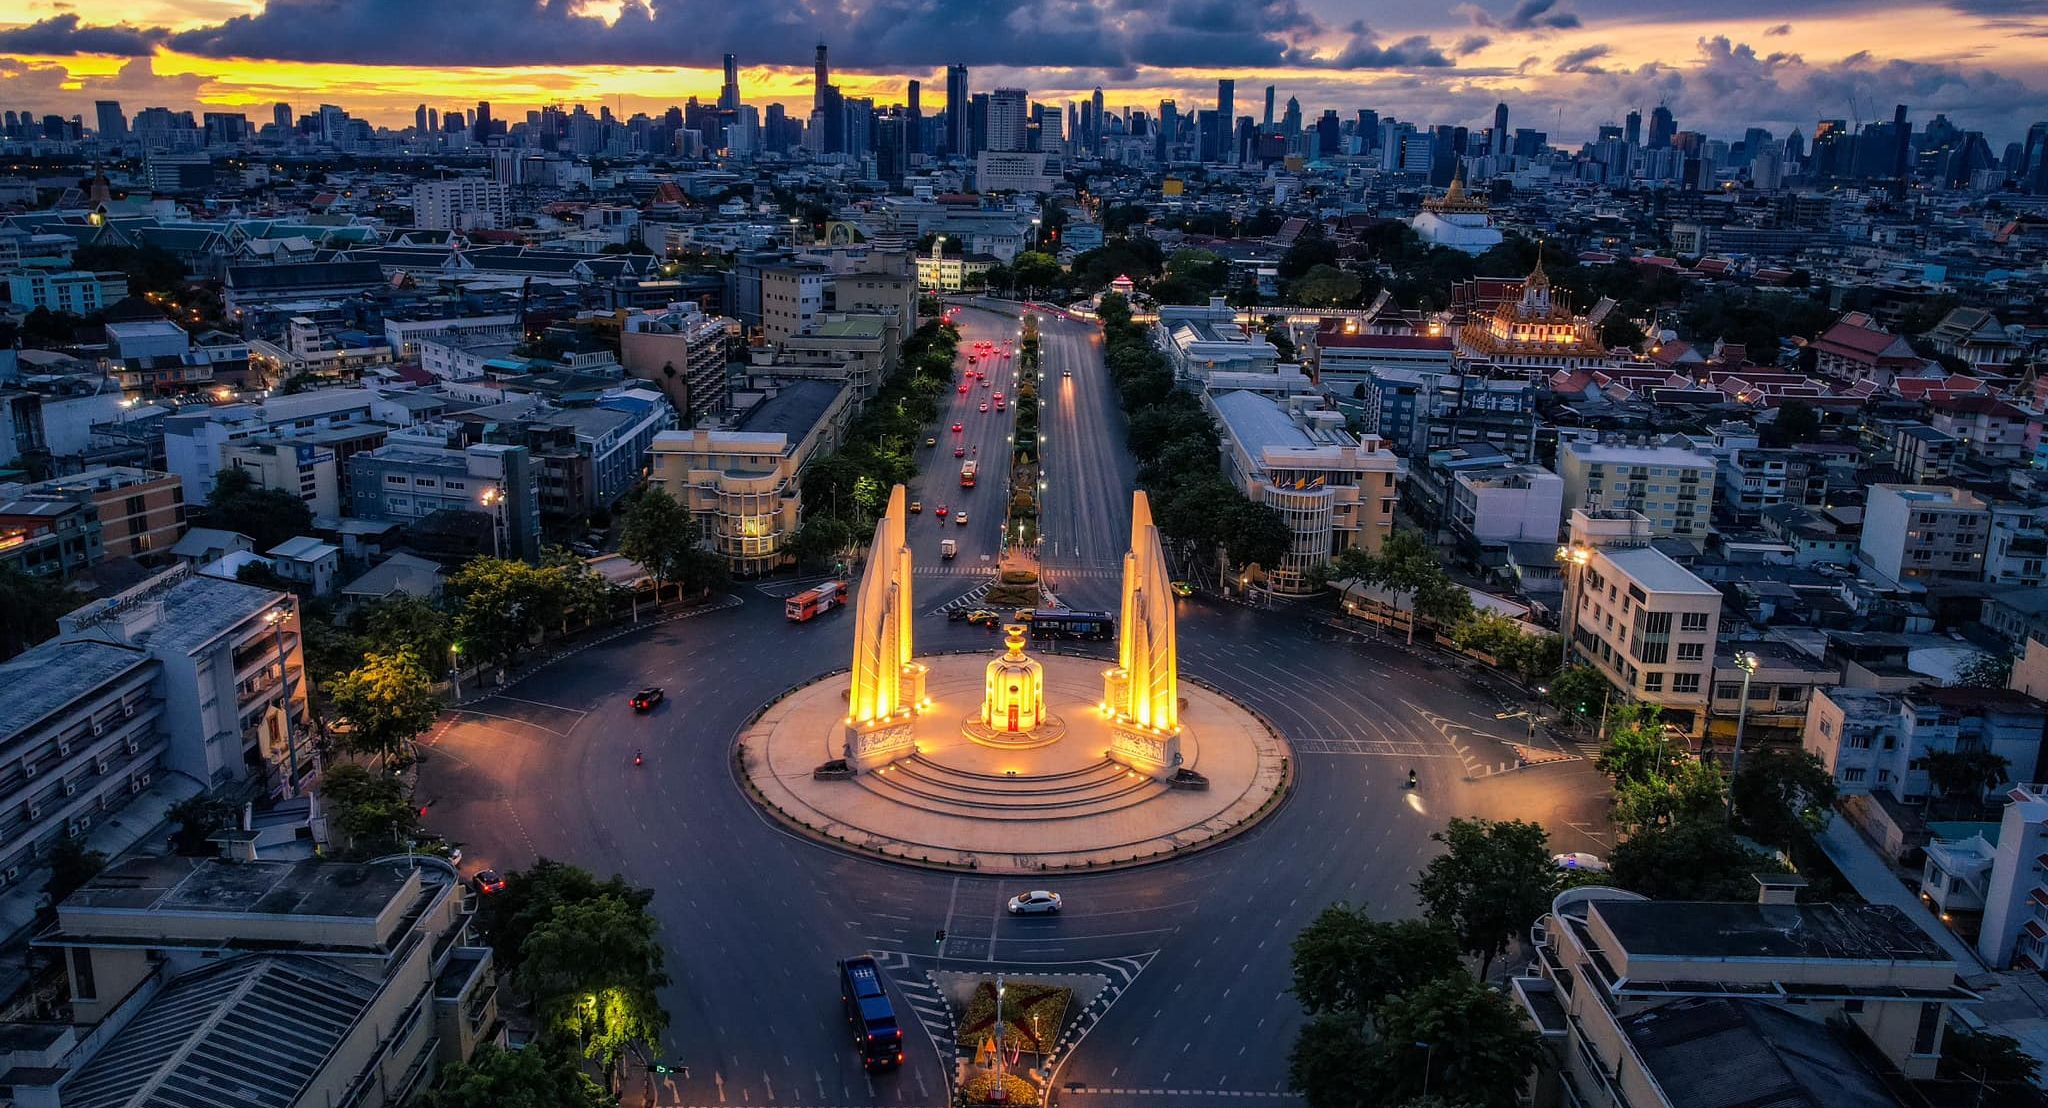 Democracy Monument illuminated at night in Bangkok